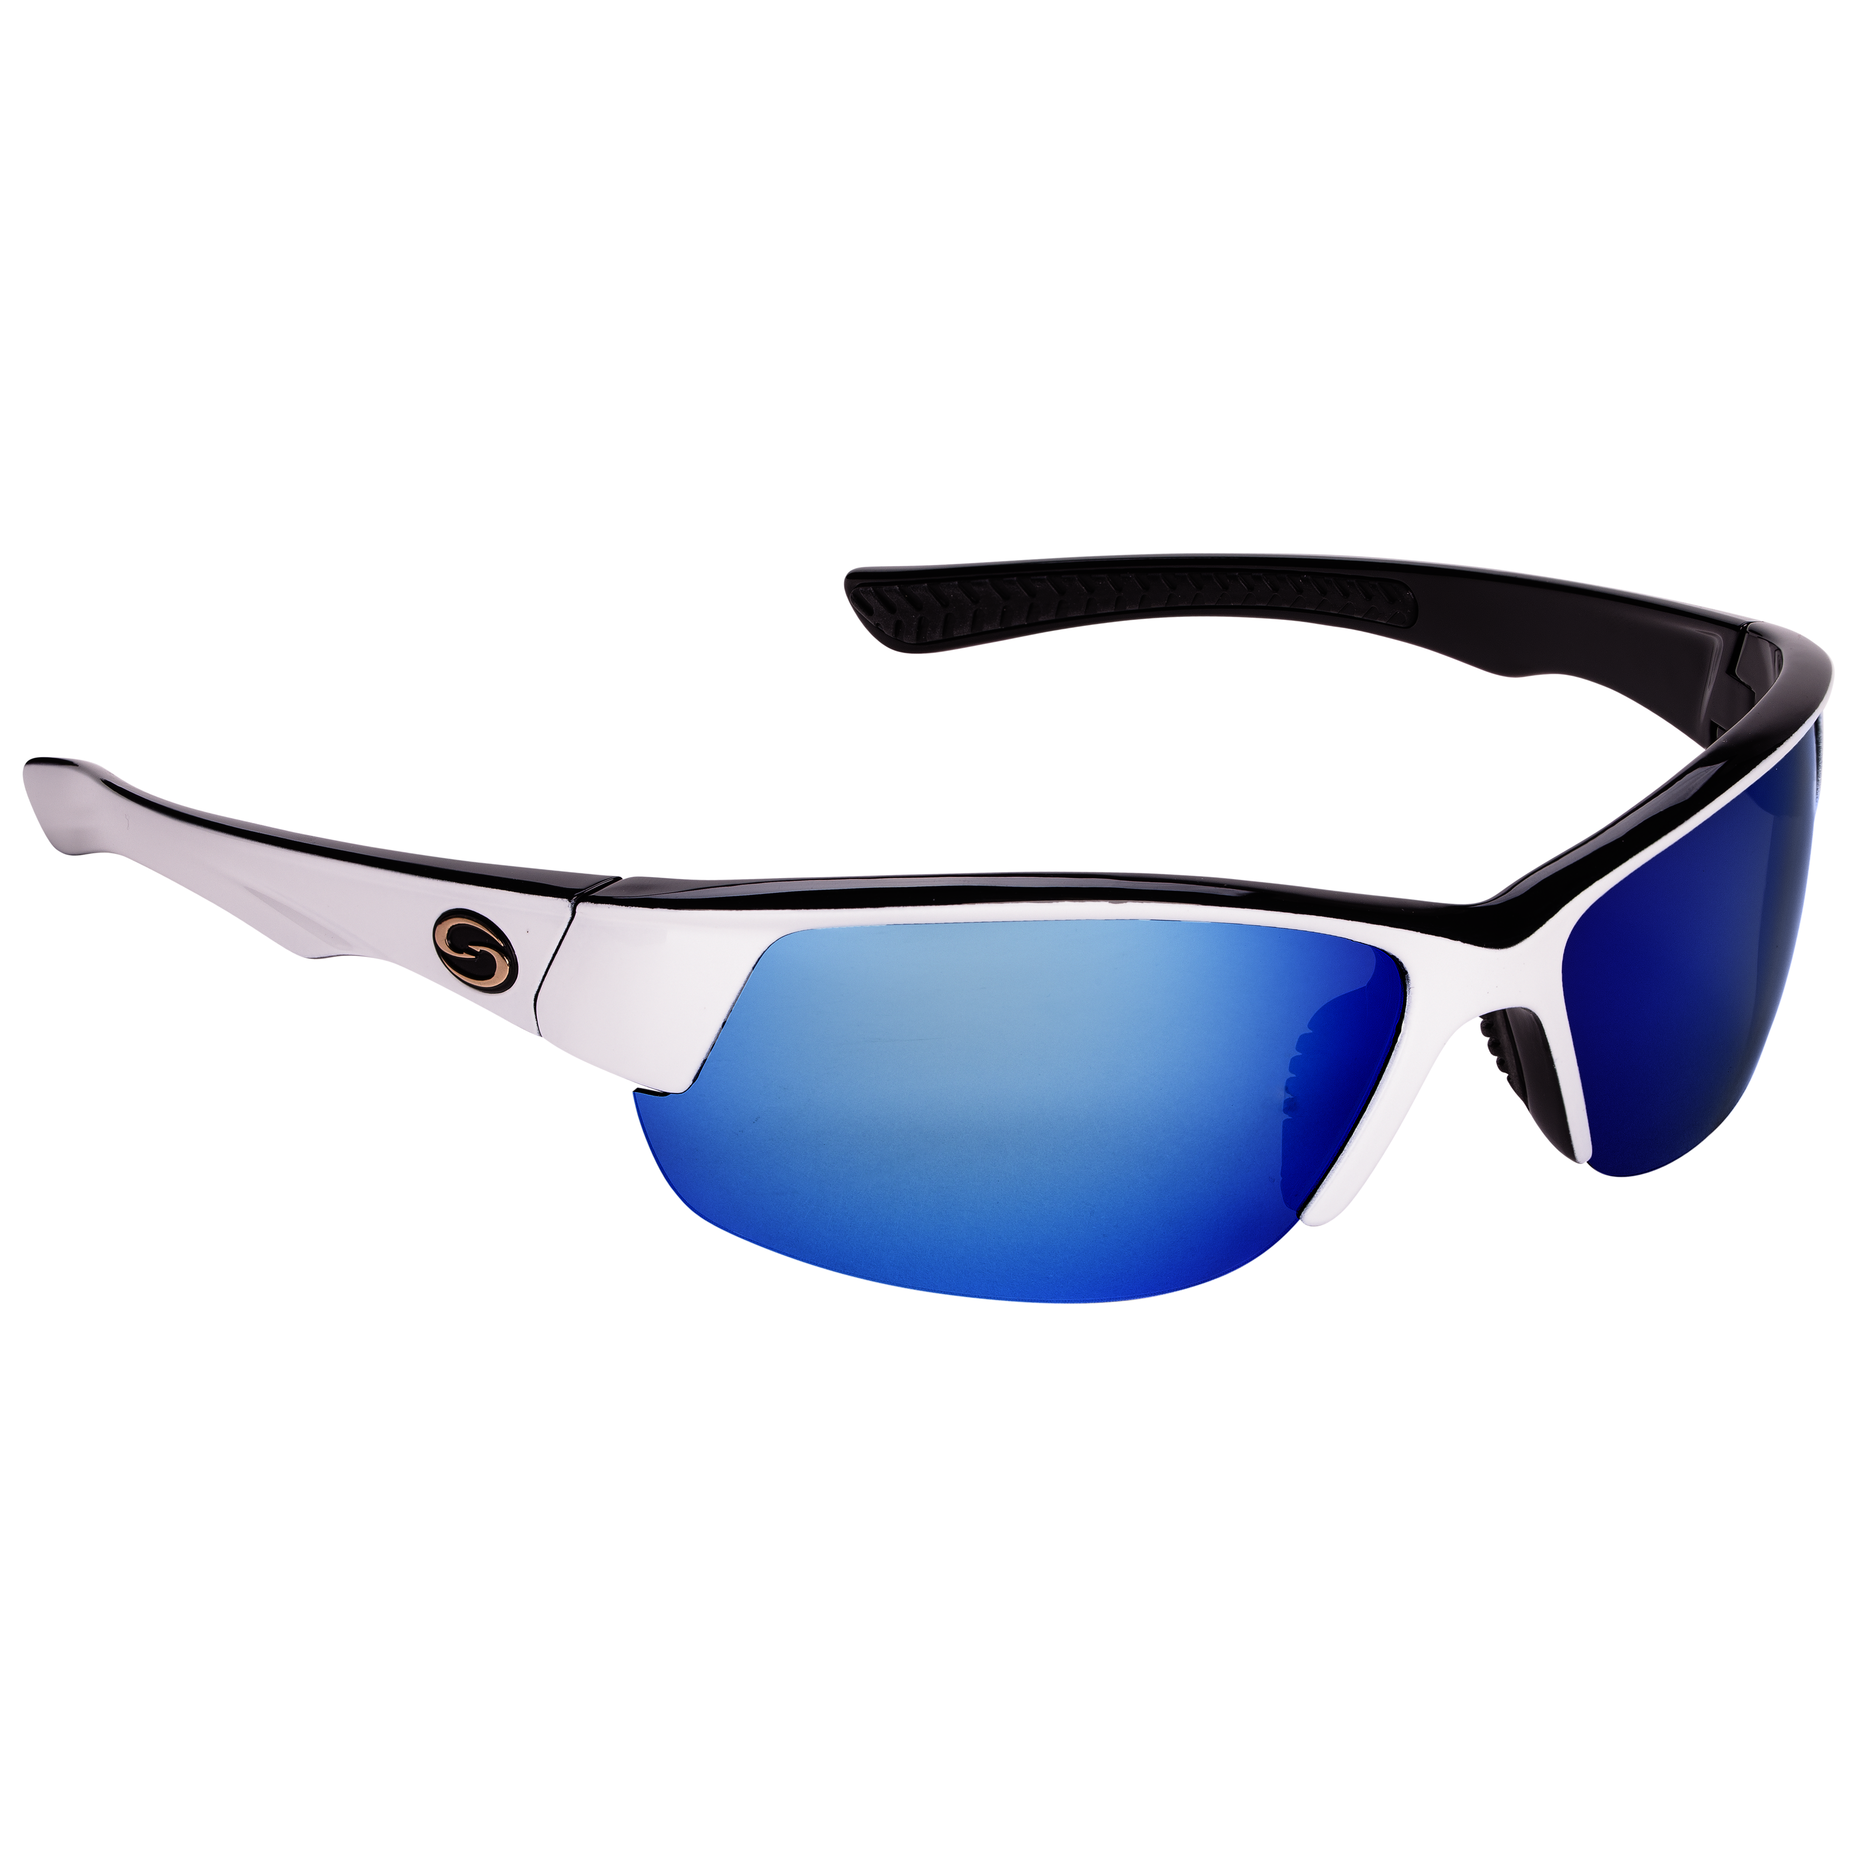 Strike King S11 Okeechobee Sunglasses SGS1162 – Angler's Pro